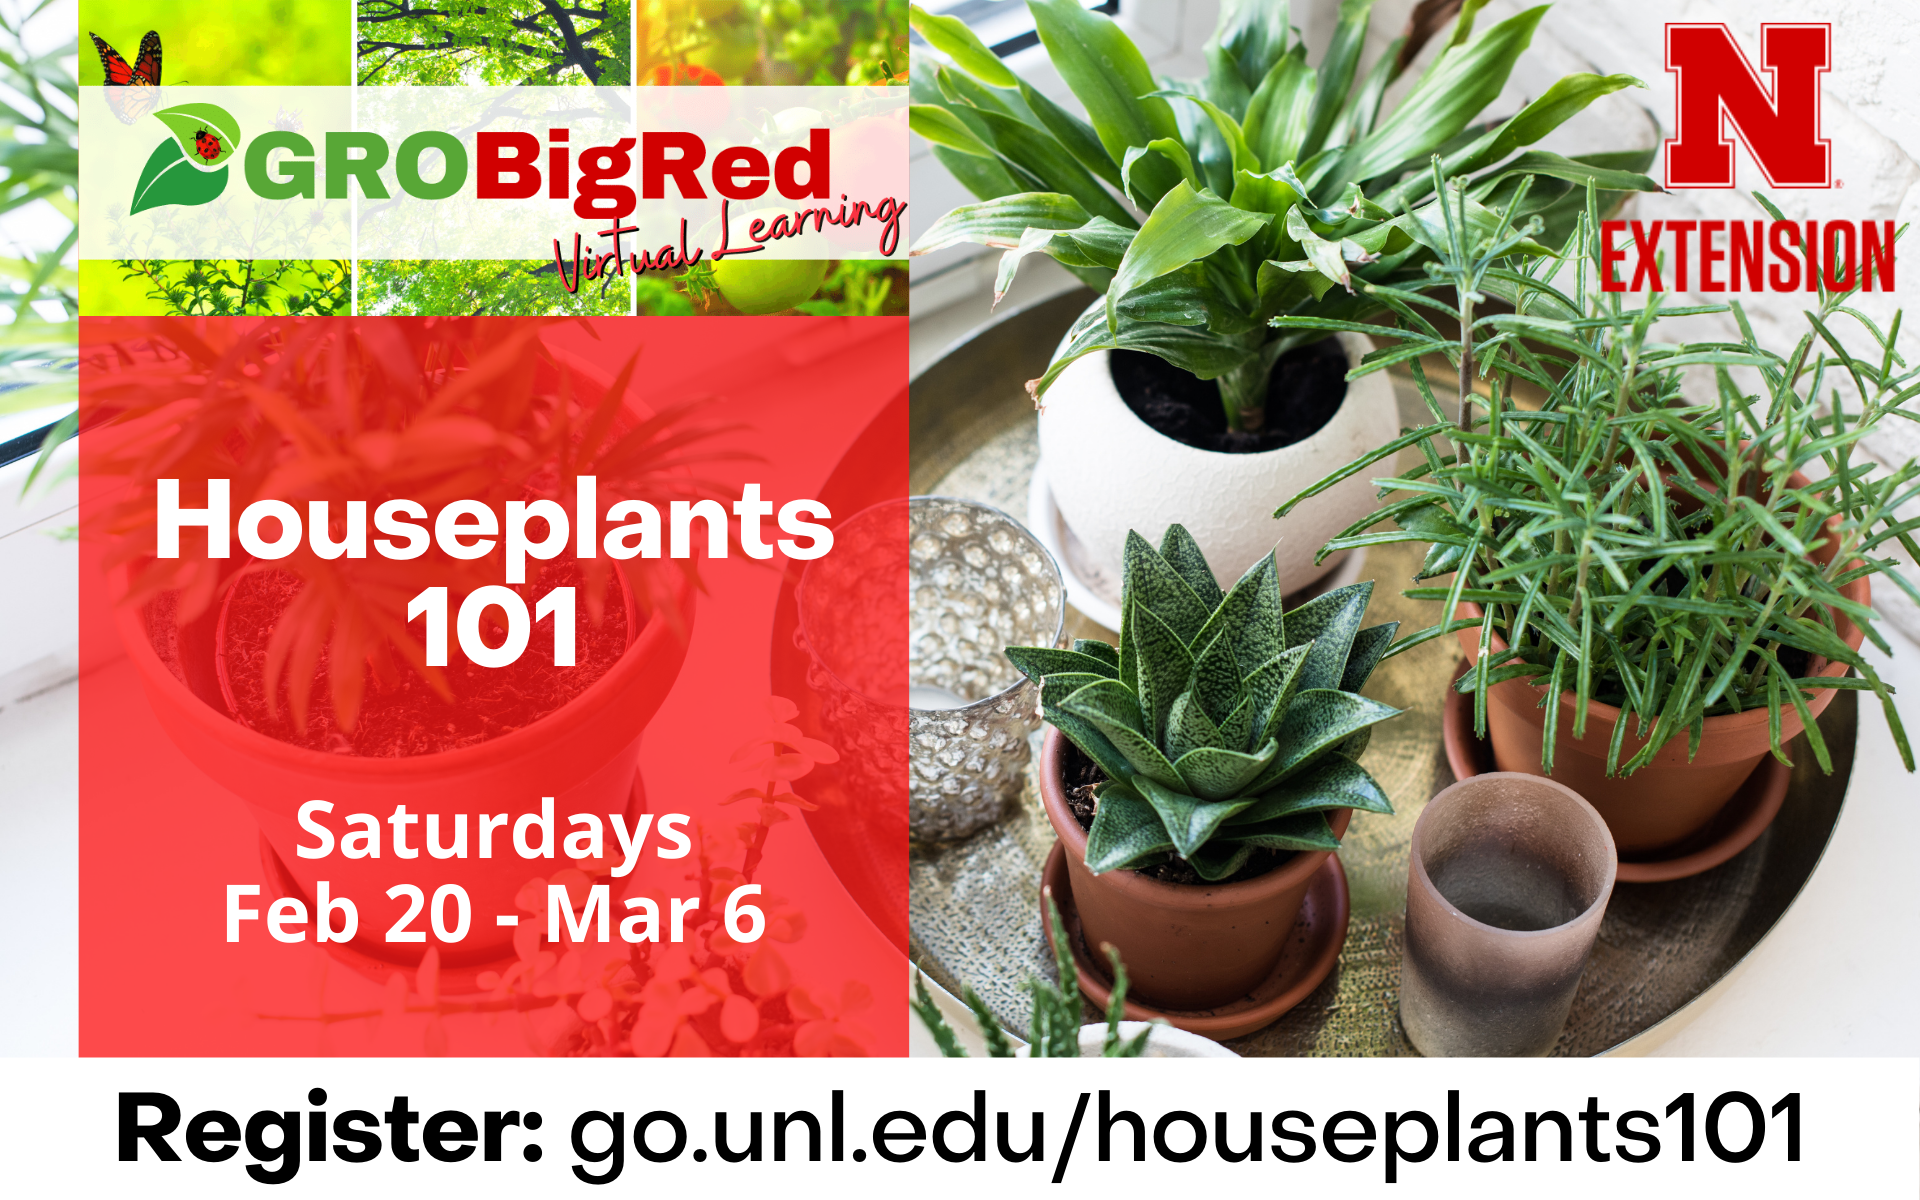 Houseplants 101, Saturdays February 20-March 6. register at go.unl.edu/houseplants101